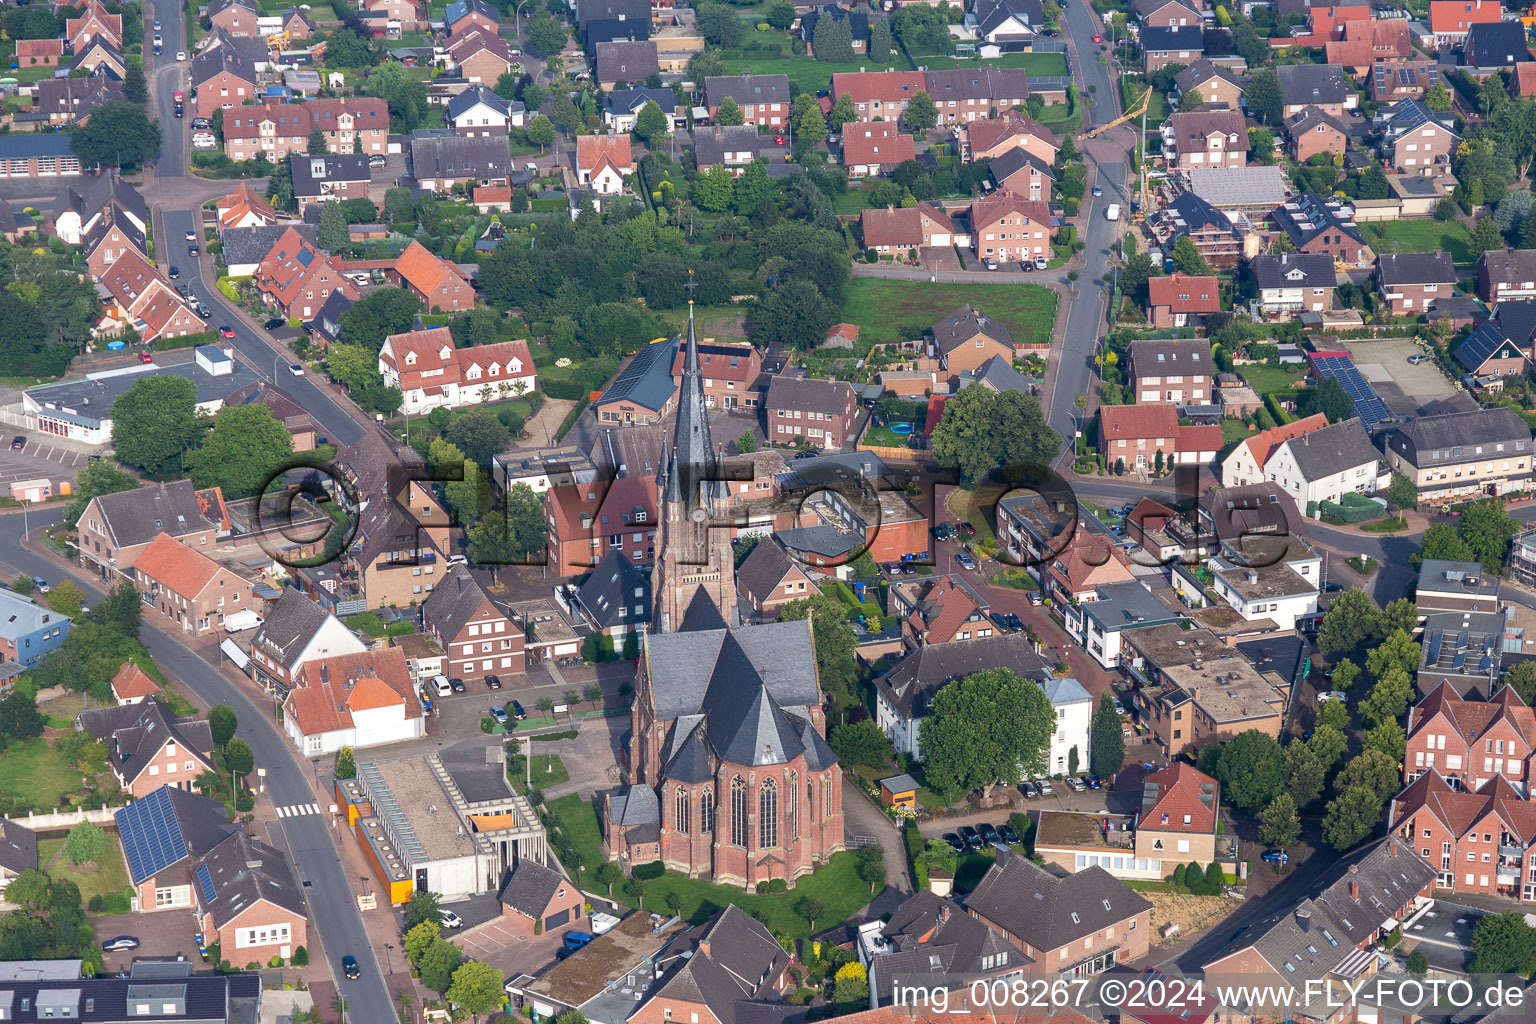 Aerial view of Church building " St. Ludgerus Weseke " in Borken in the state North Rhine-Westphalia, Germany